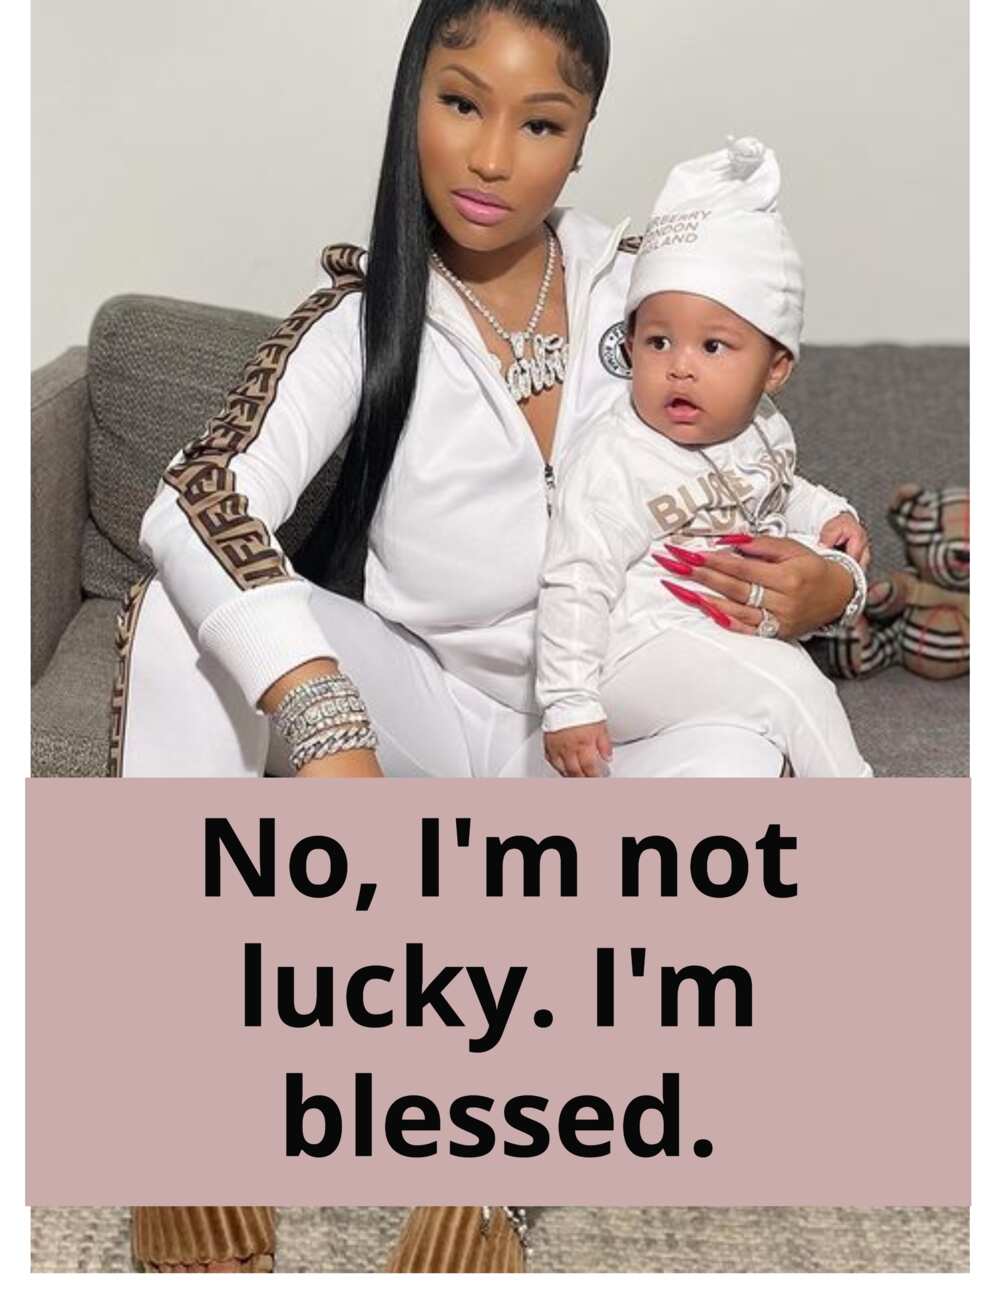 Best Nicki Minaj quotes about success